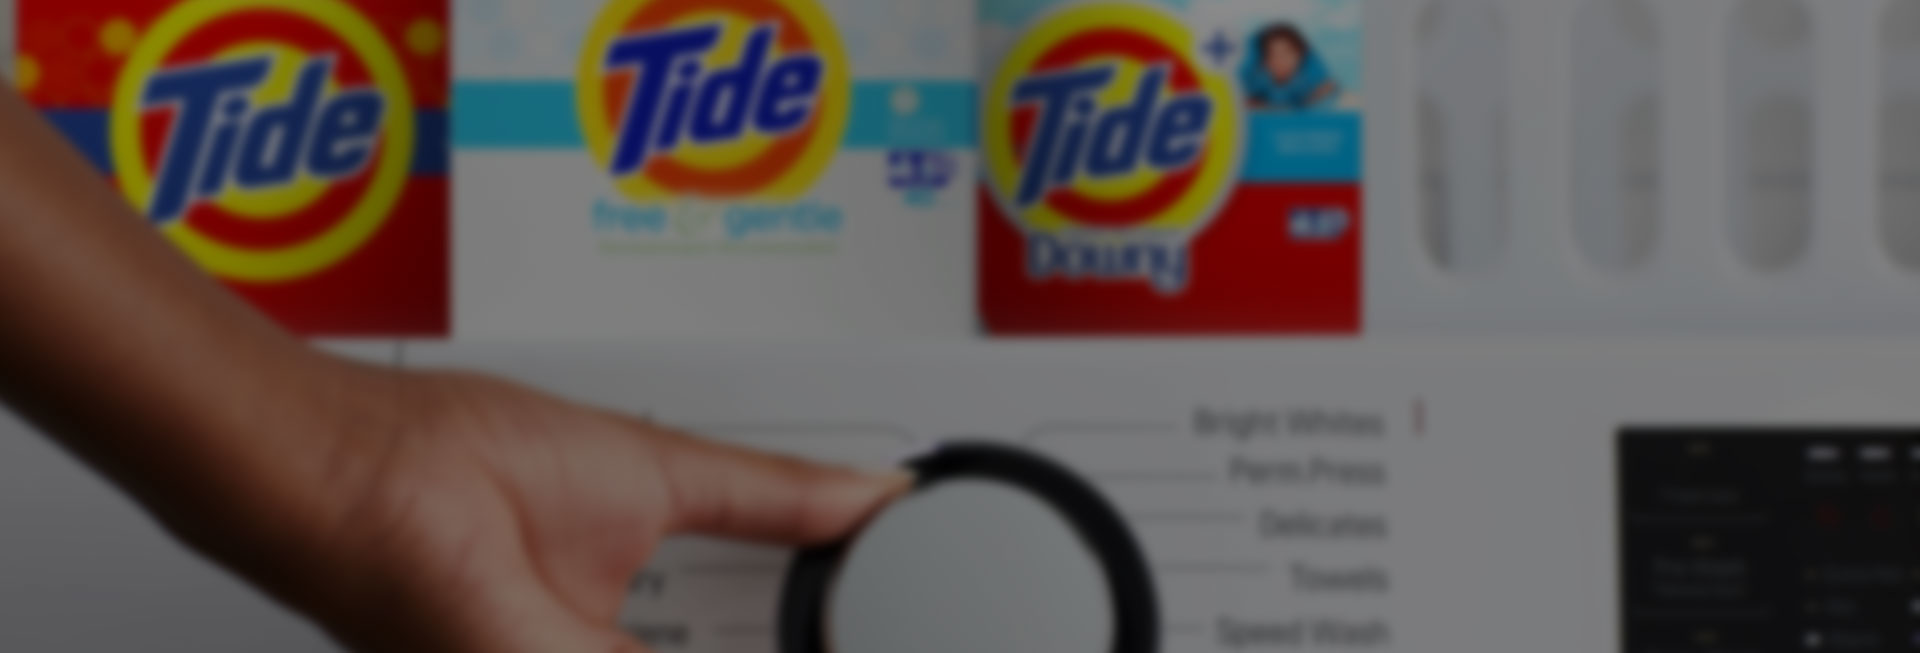 Tide powder detergent products on a washing machine